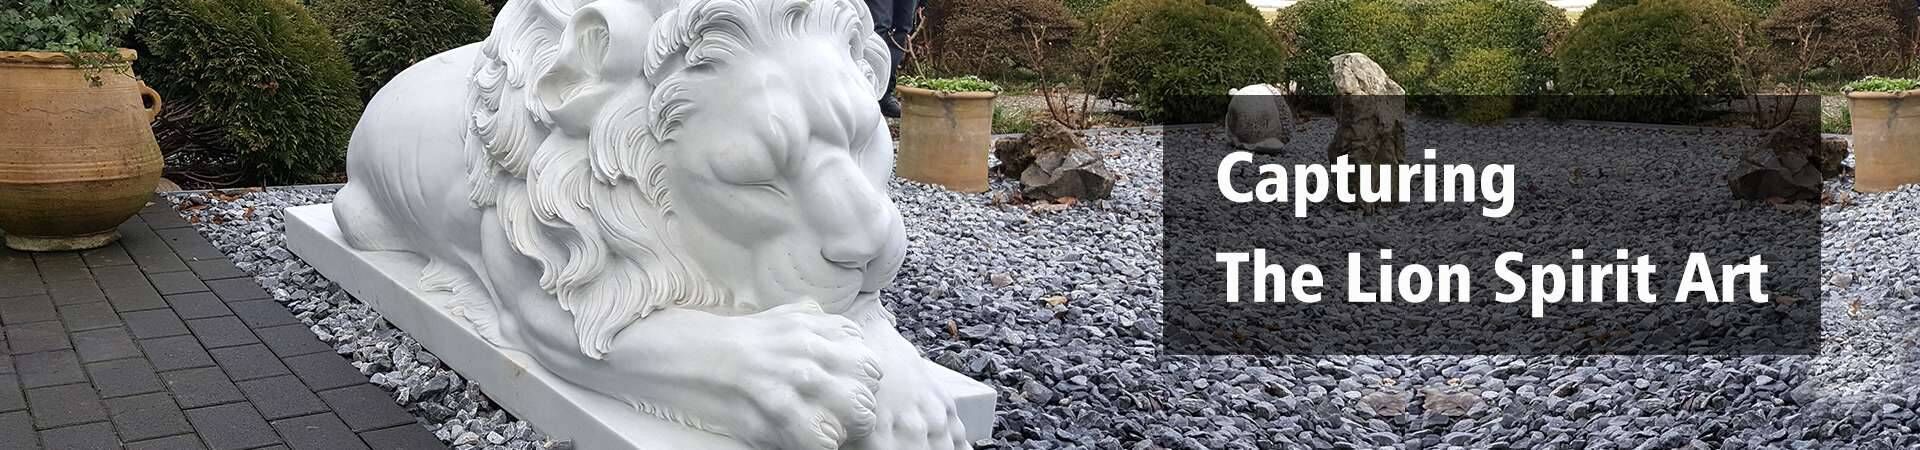 Big lion statue			